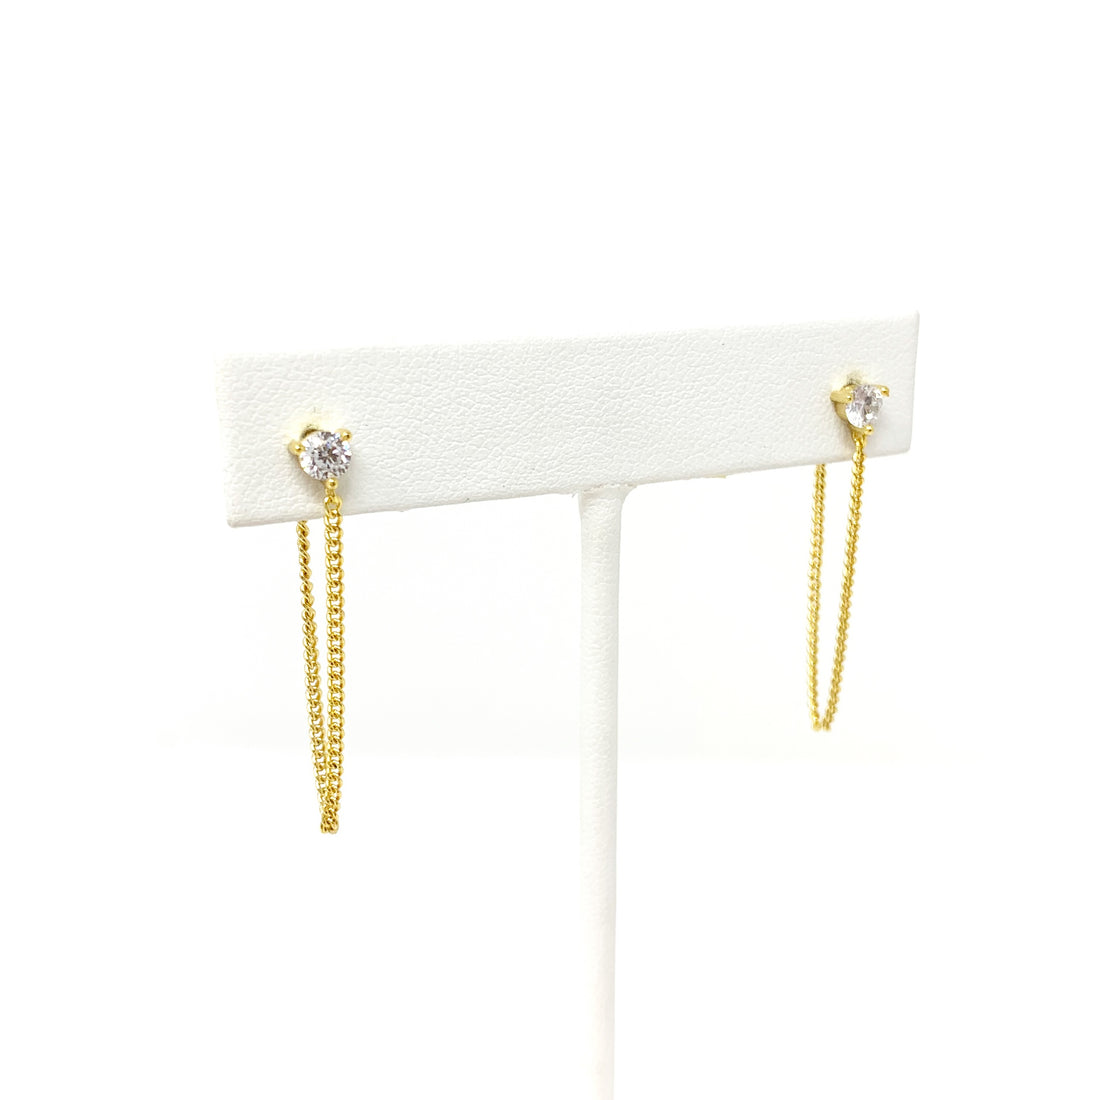 Kimmie Chain Stud Earrings in Gold